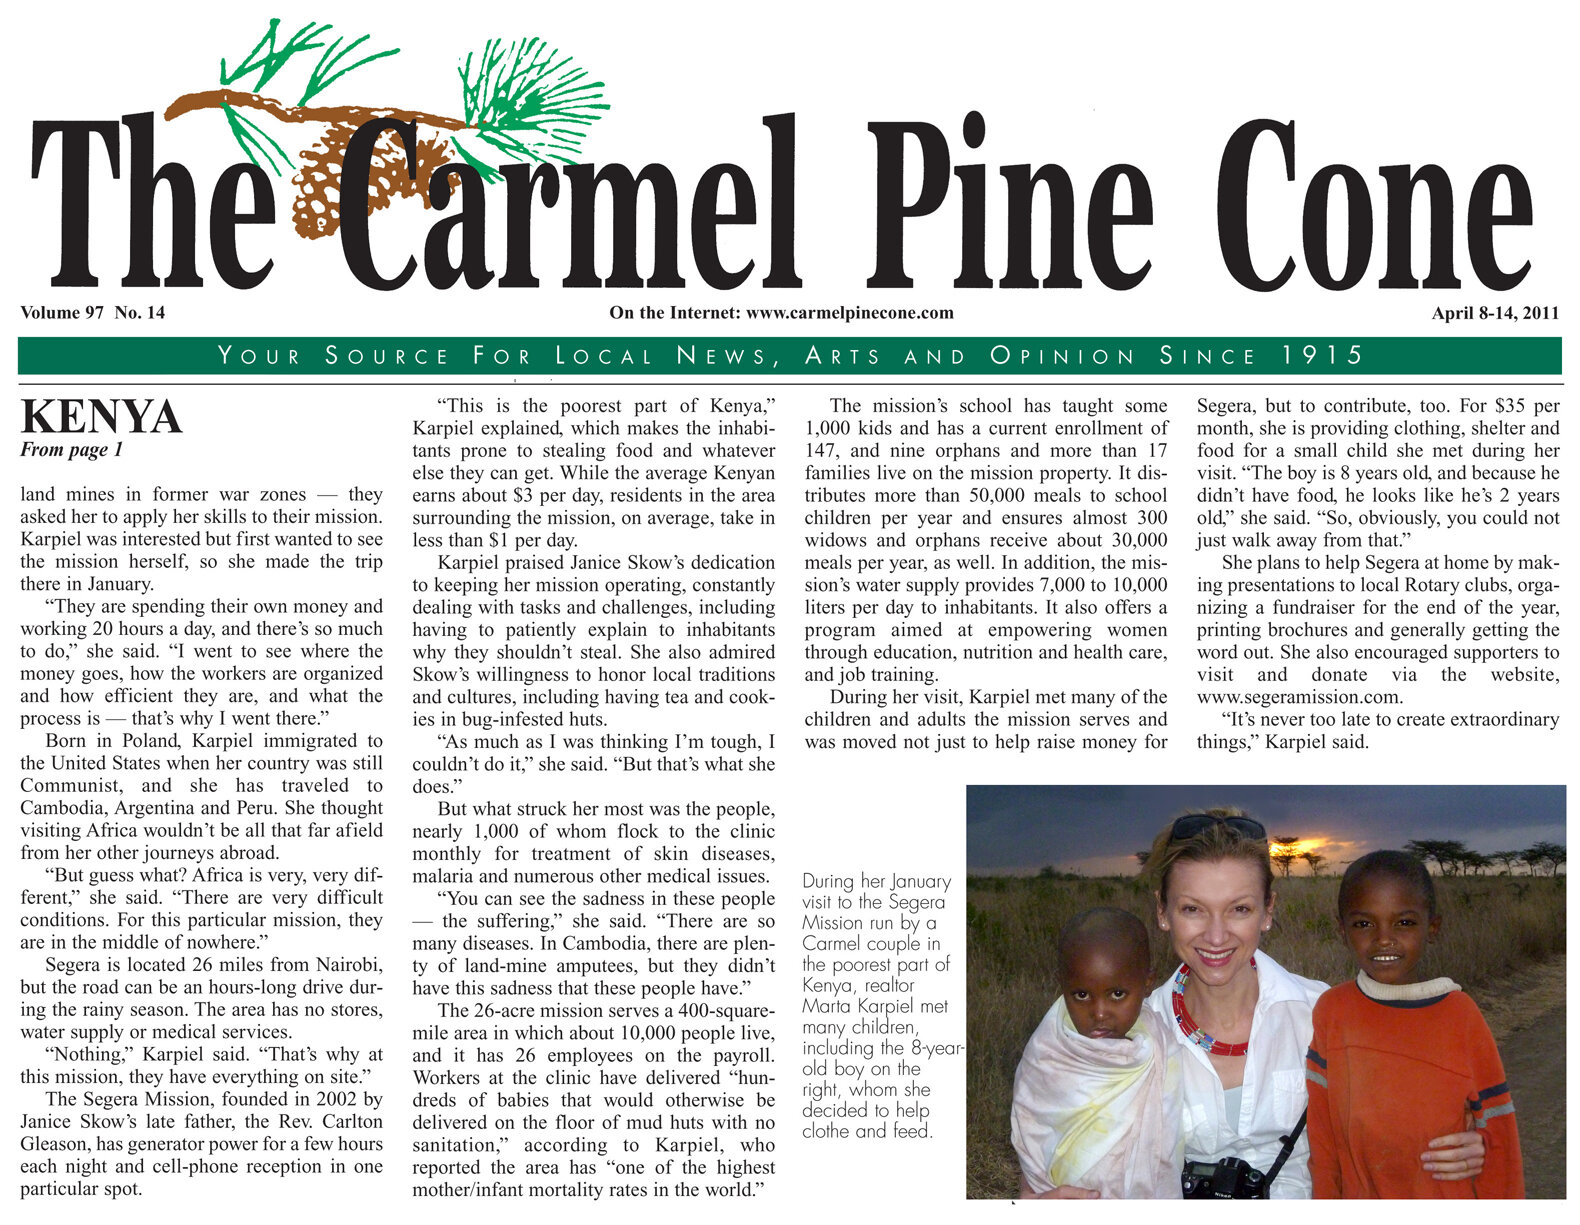 Carmel Pine Cone